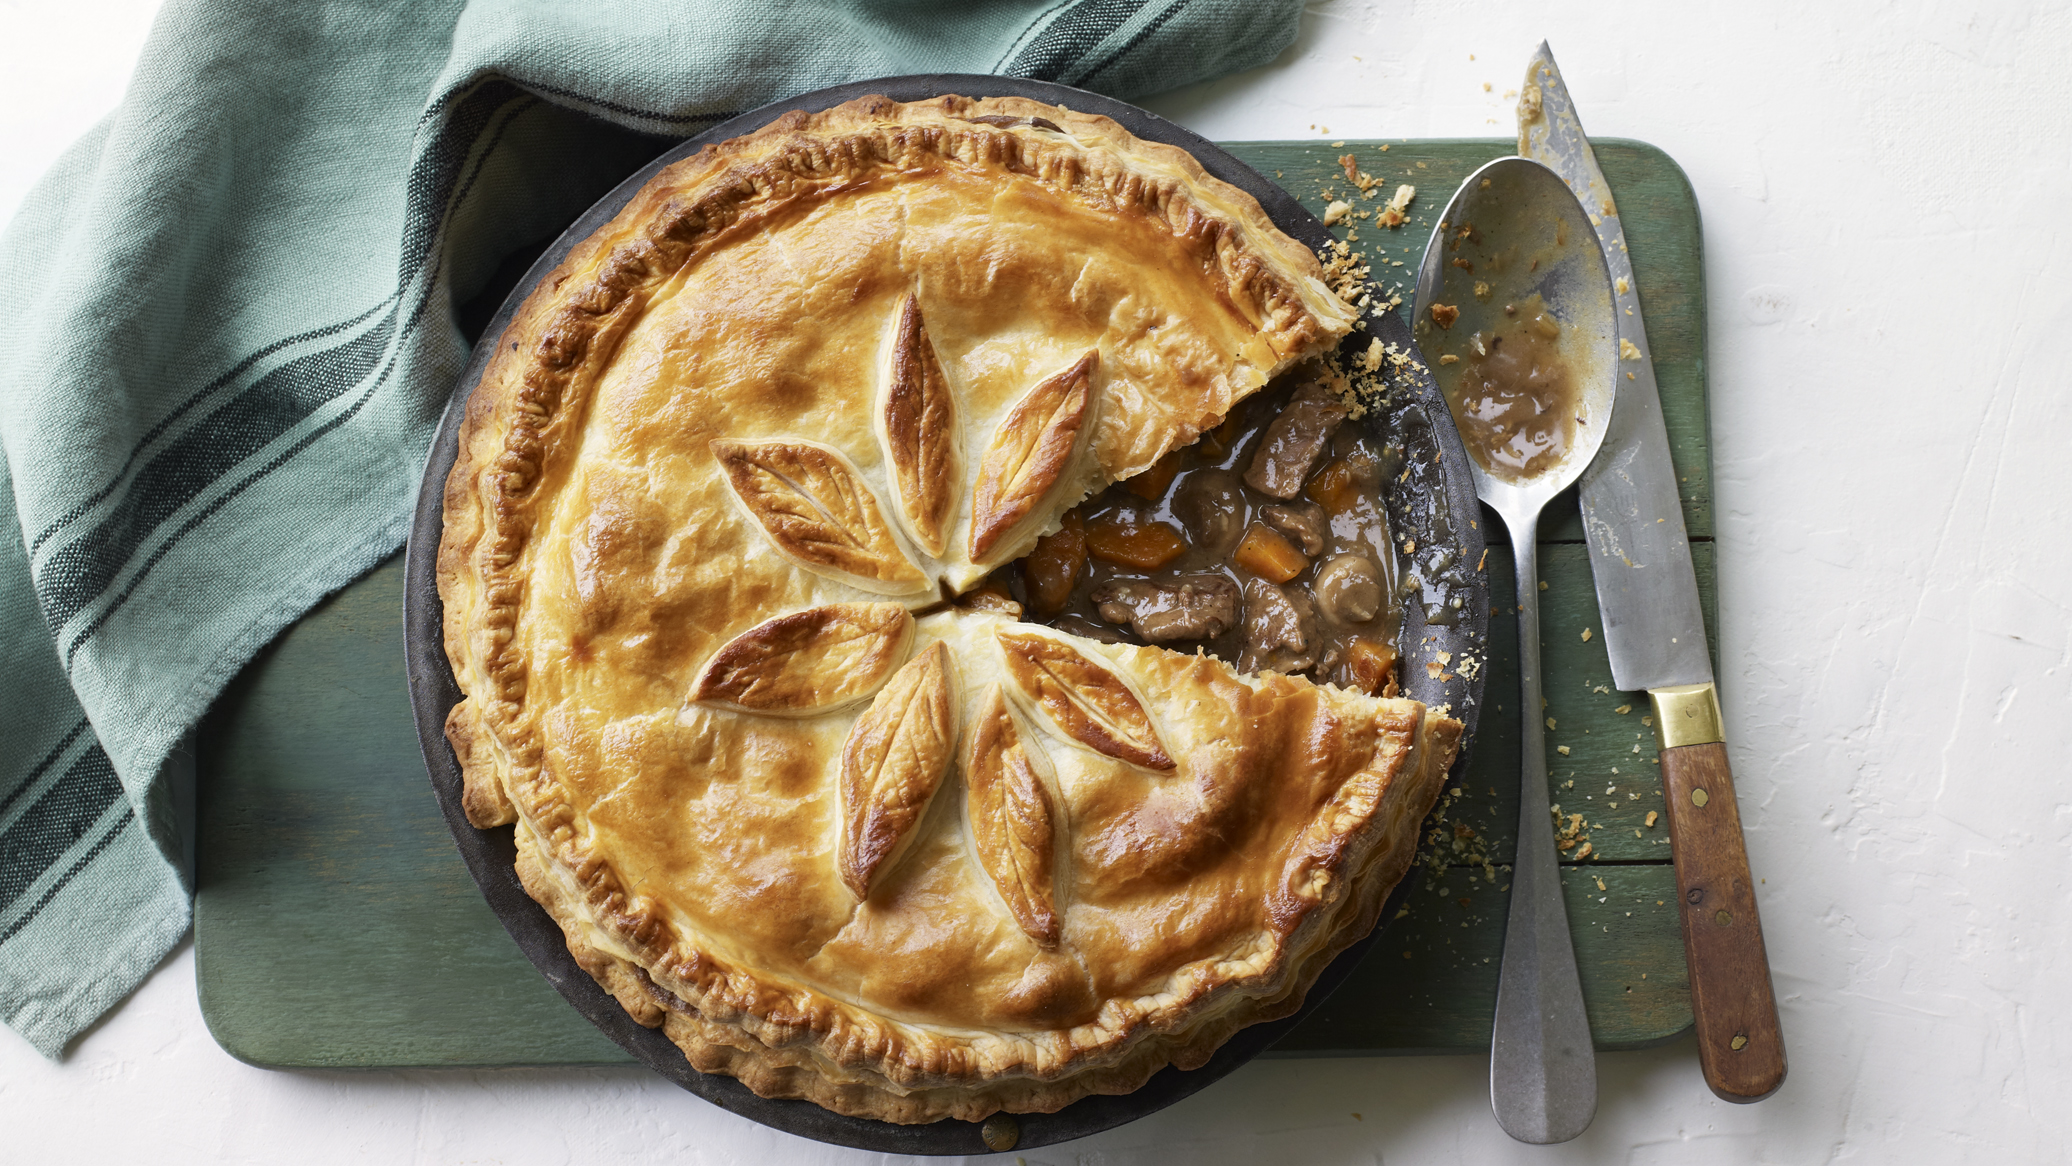 Steak and Irish stout pie recipe - BBC Food. 